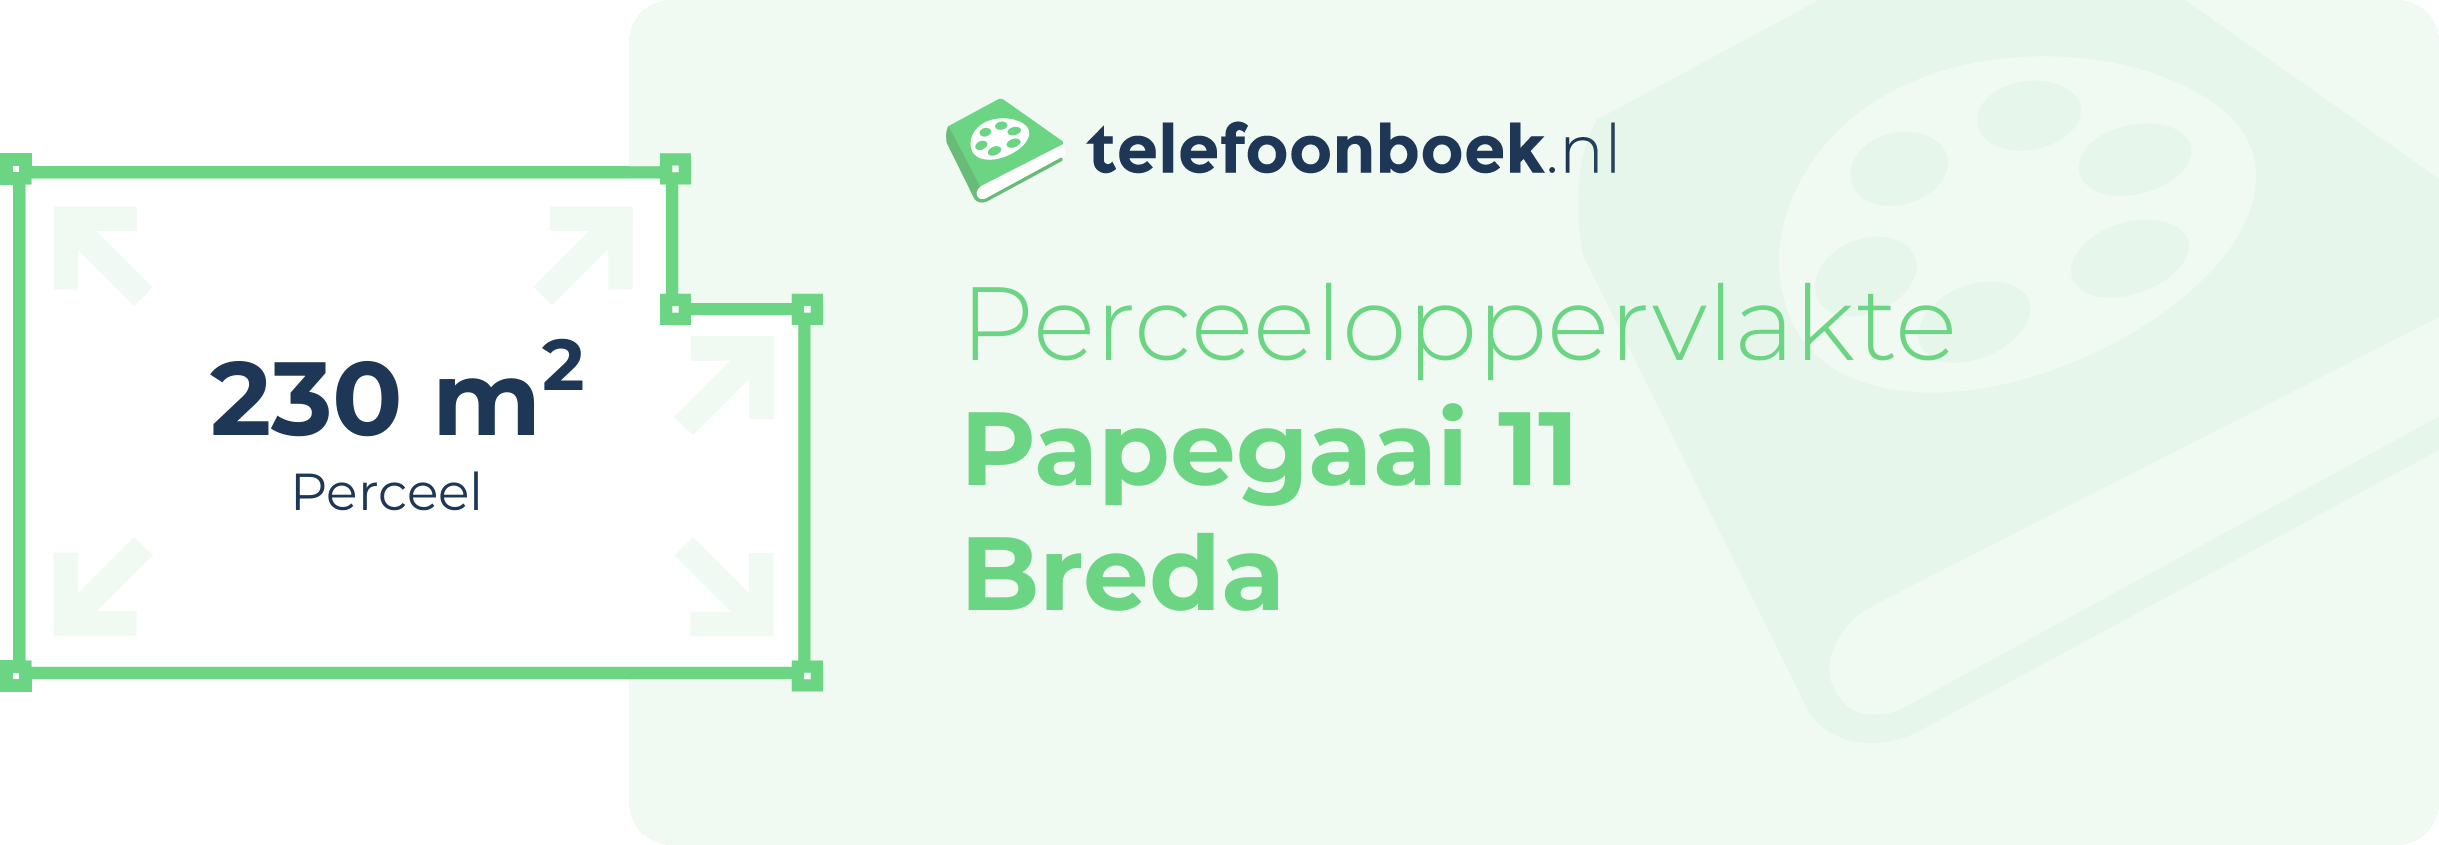 Perceeloppervlakte Papegaai 11 Breda